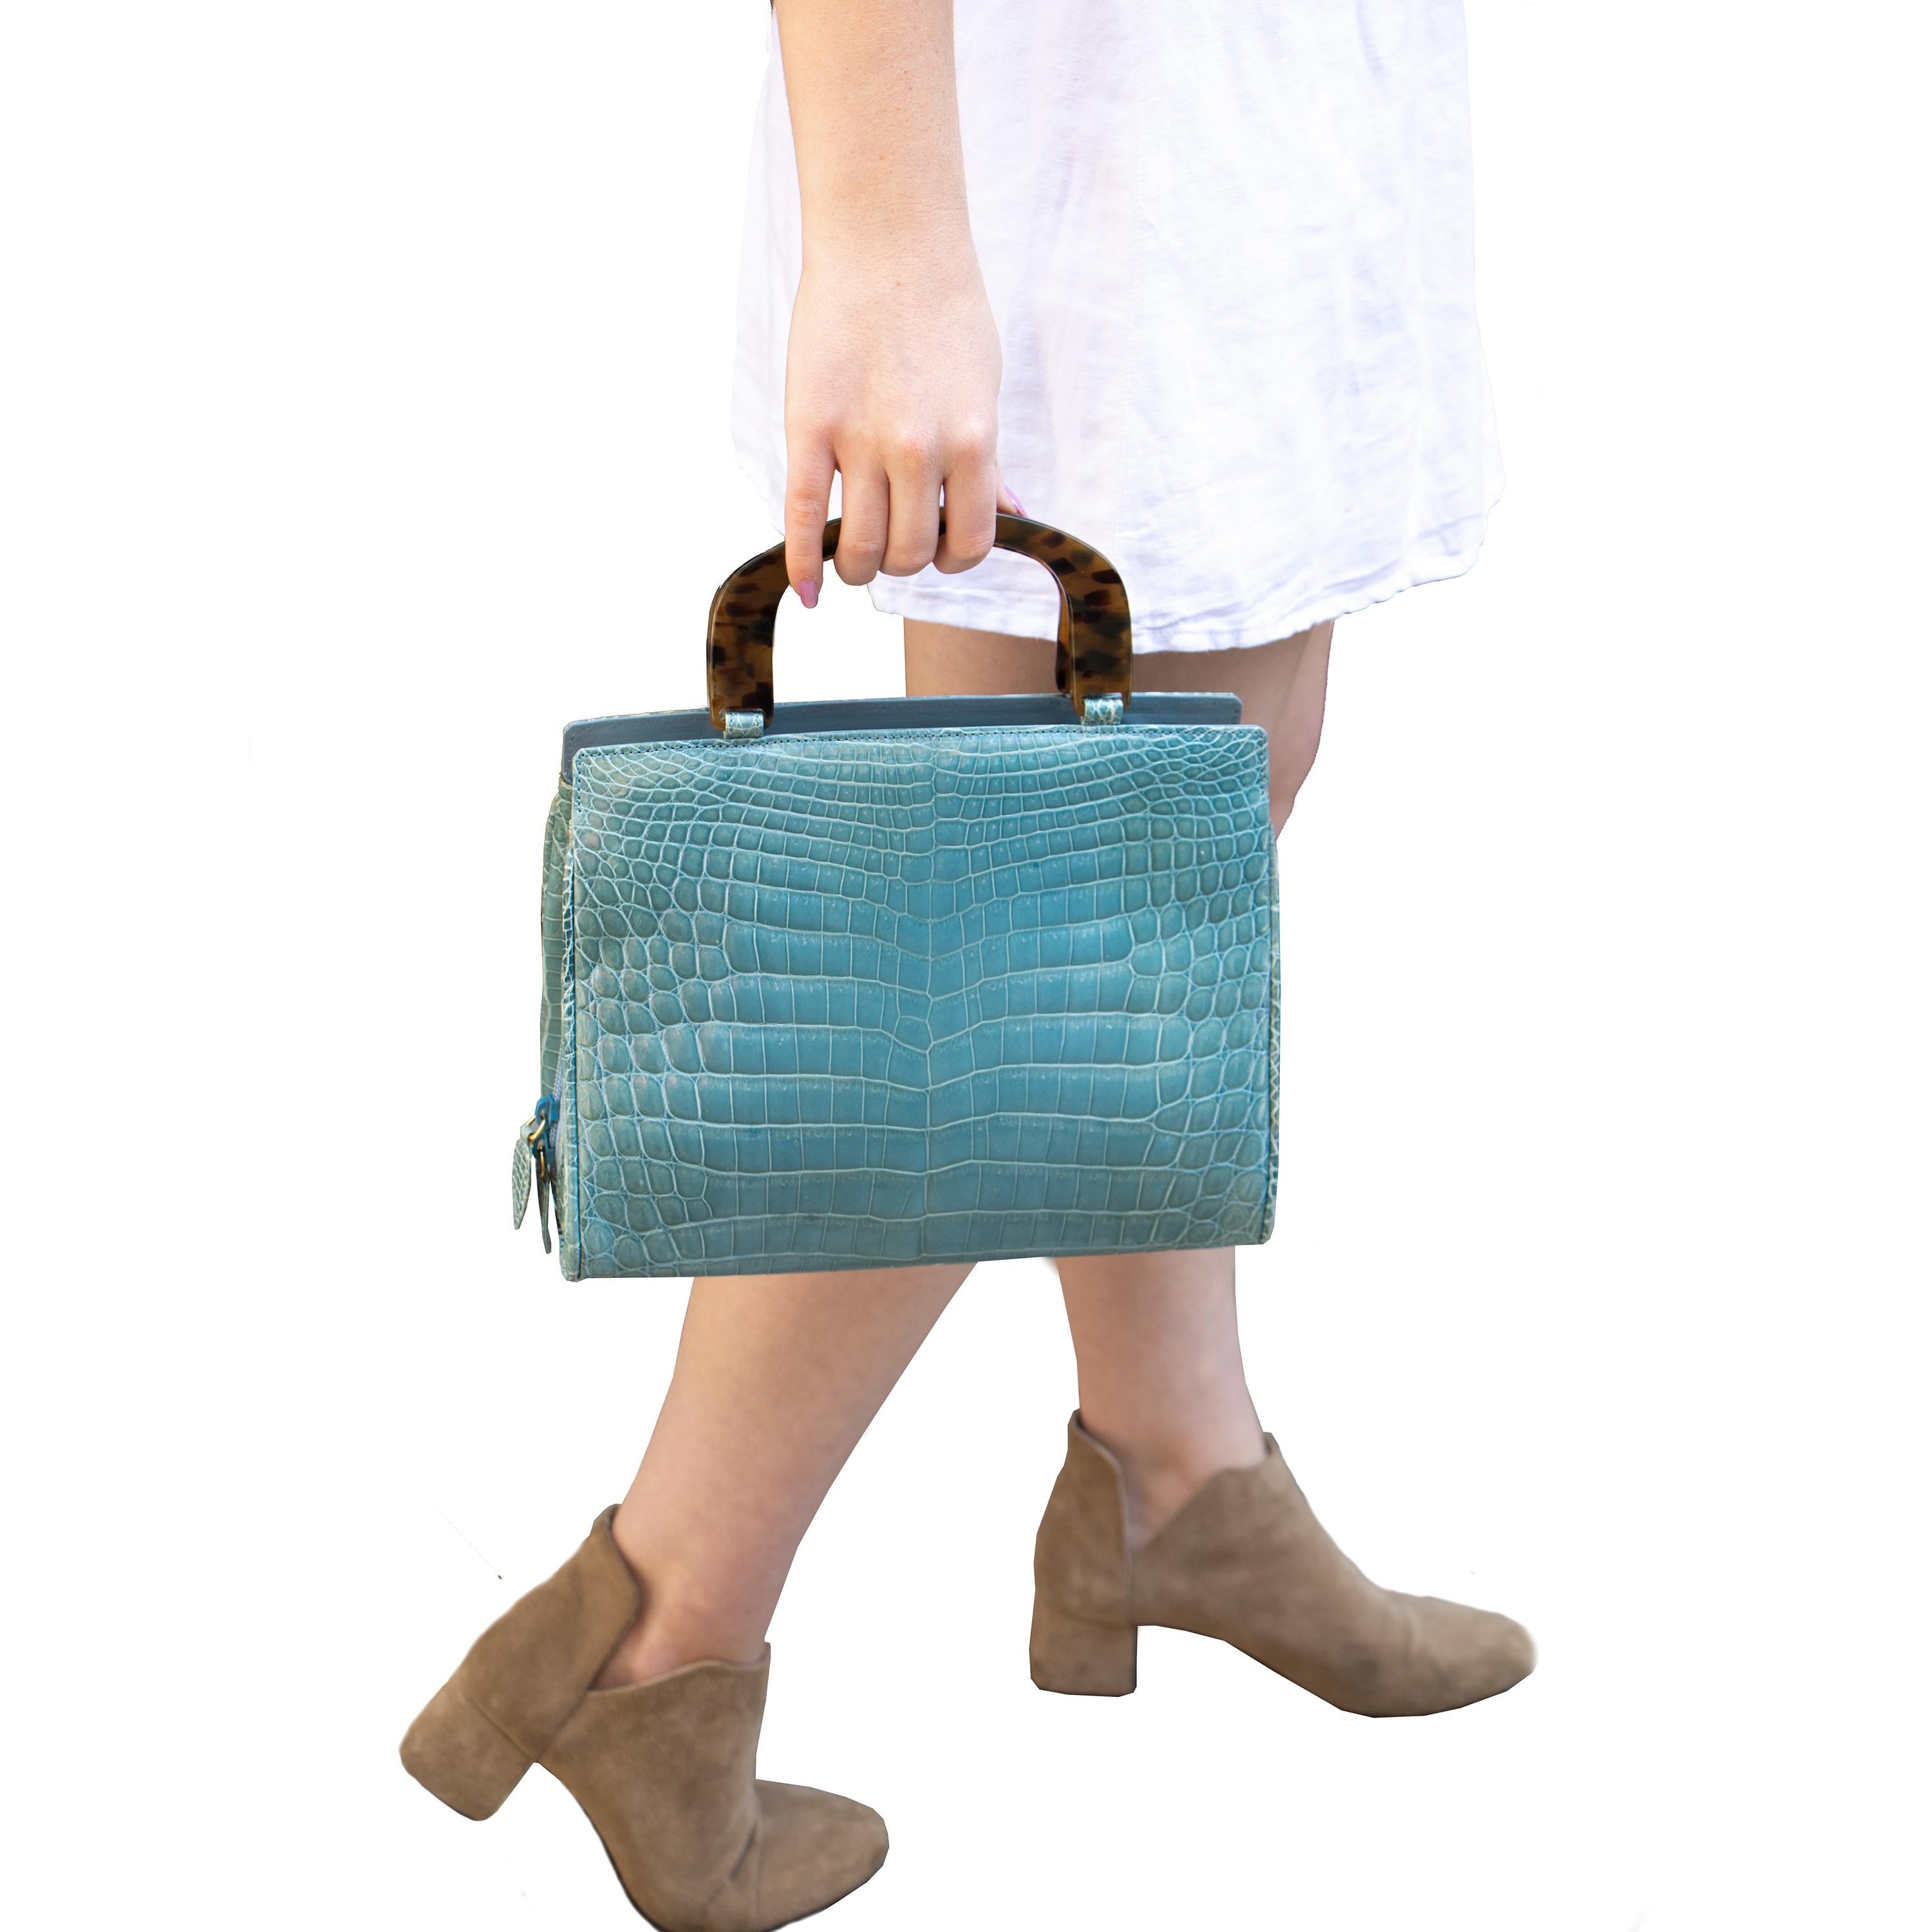 Women's or Men's Rare Lana Marks Celadon blue Crocodile handbag with matching strap